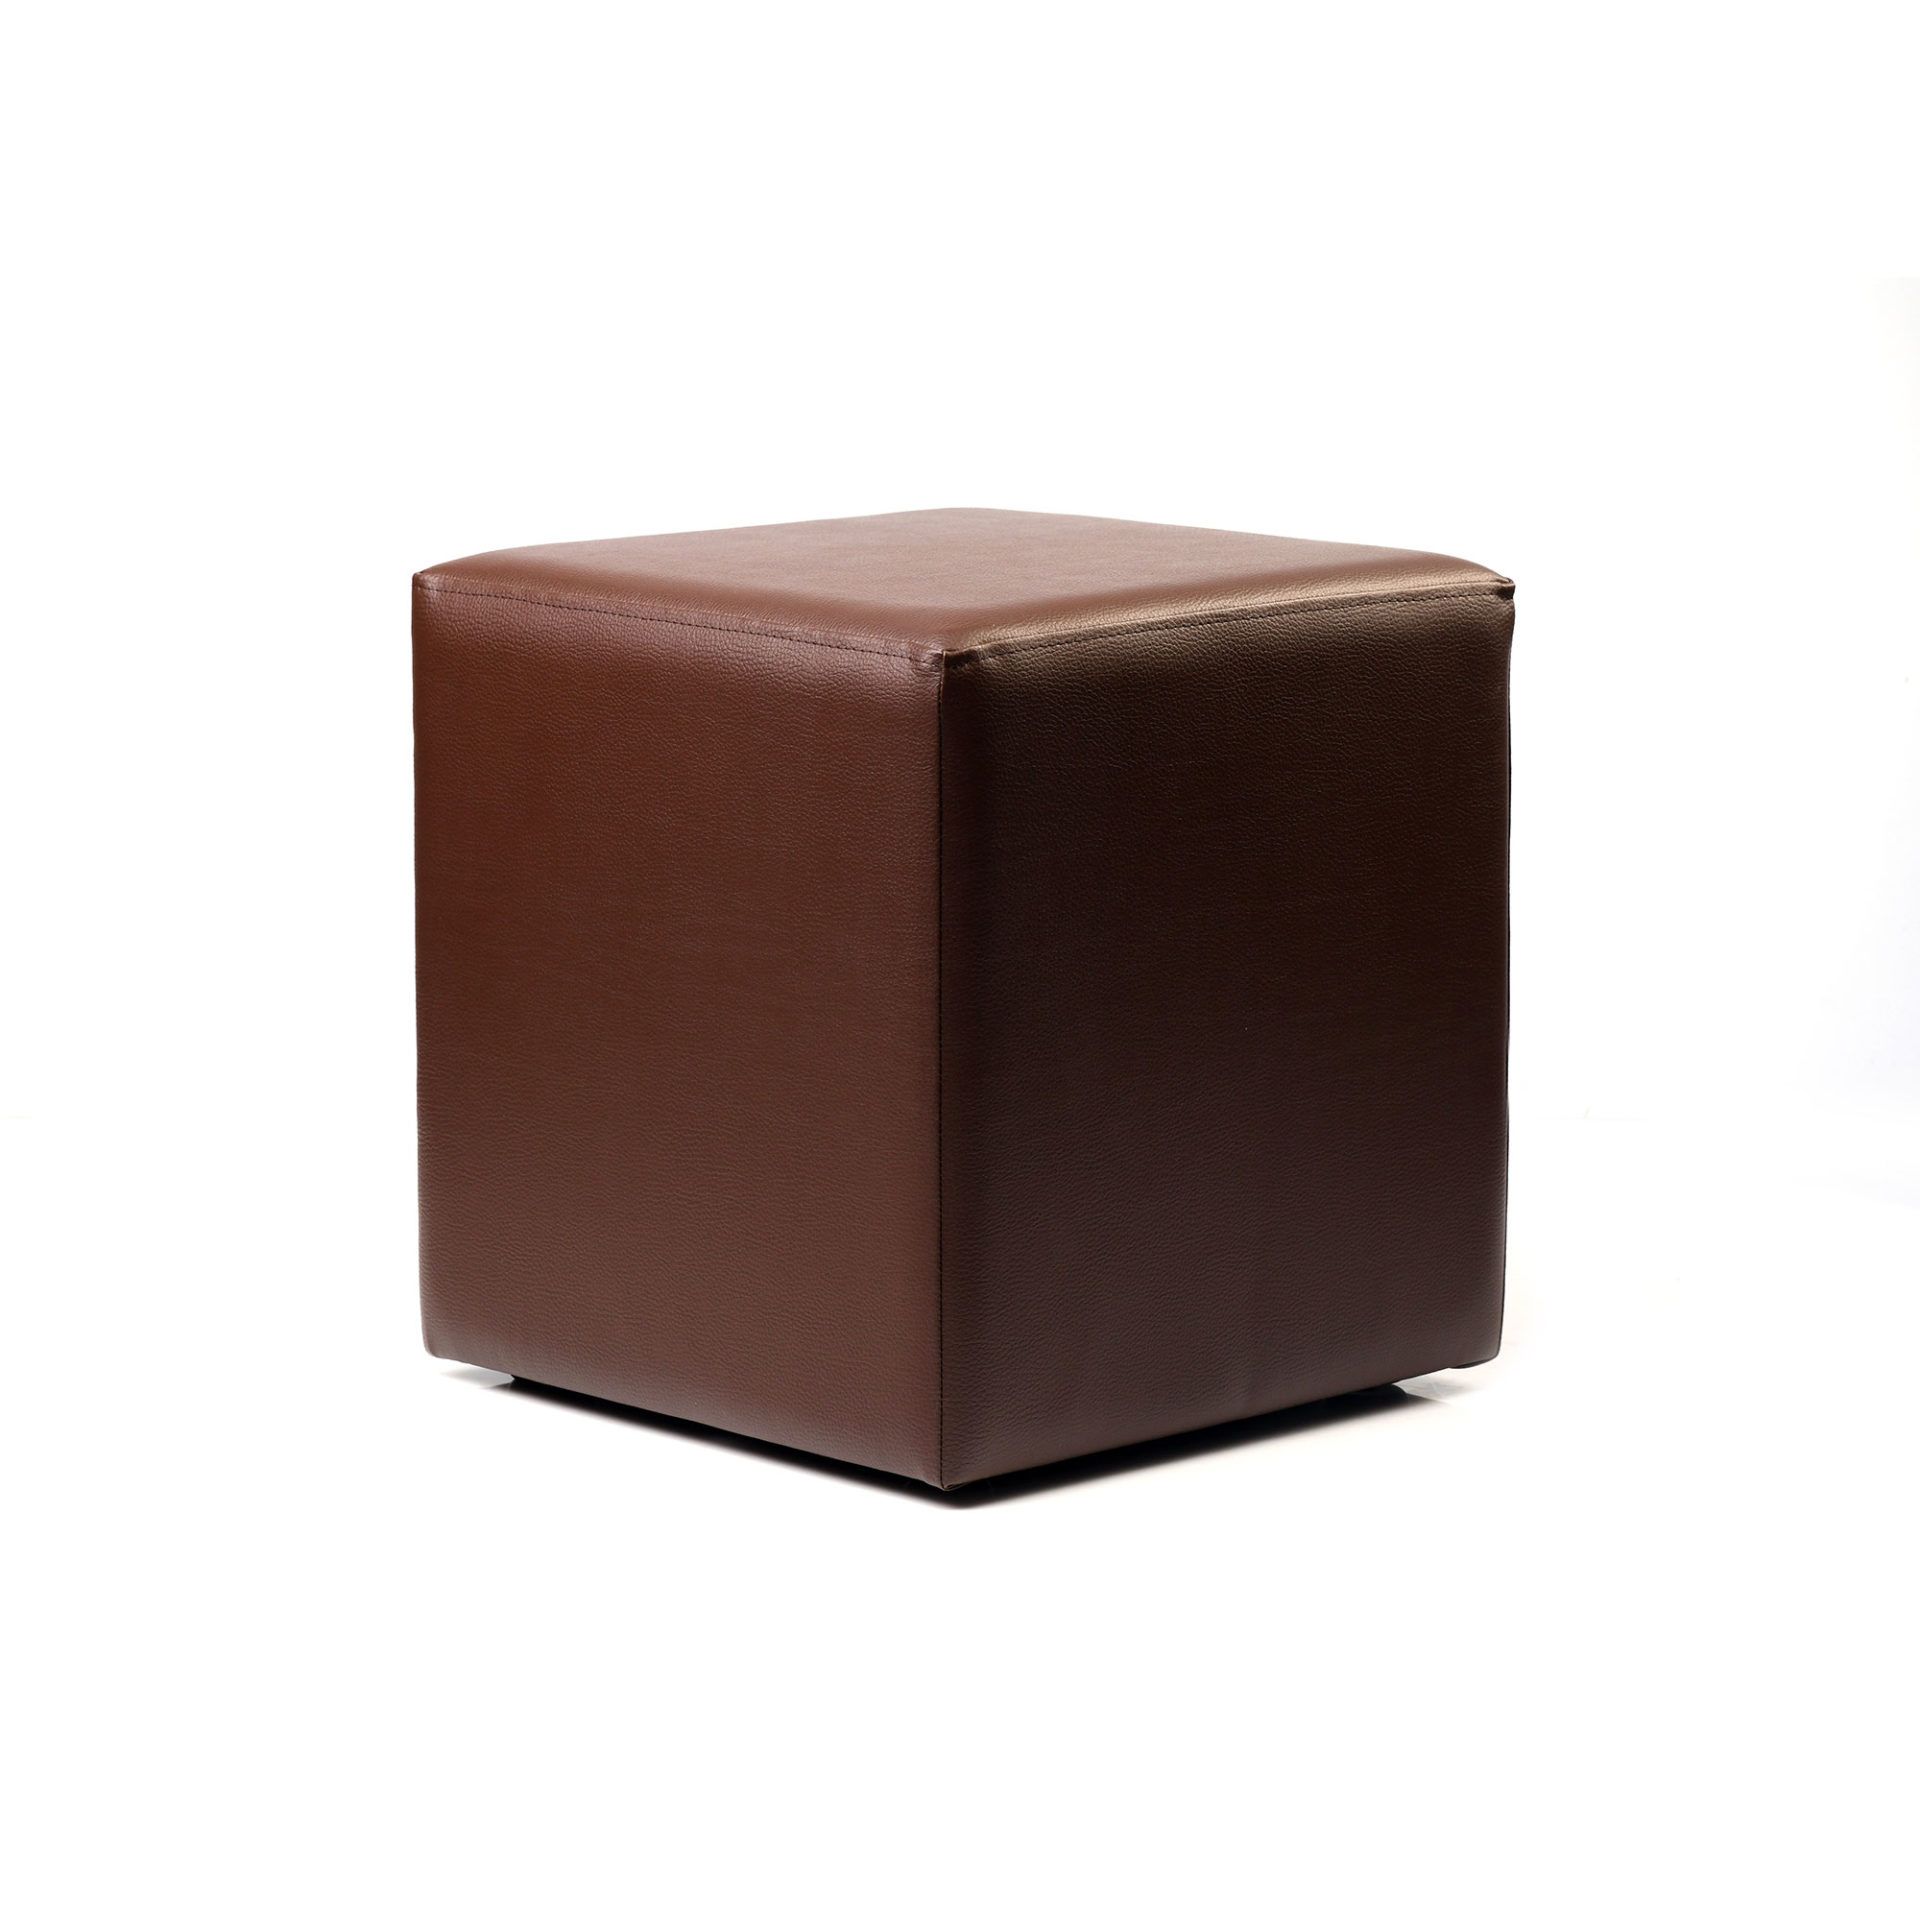 Ottoman Cube - Chocolate